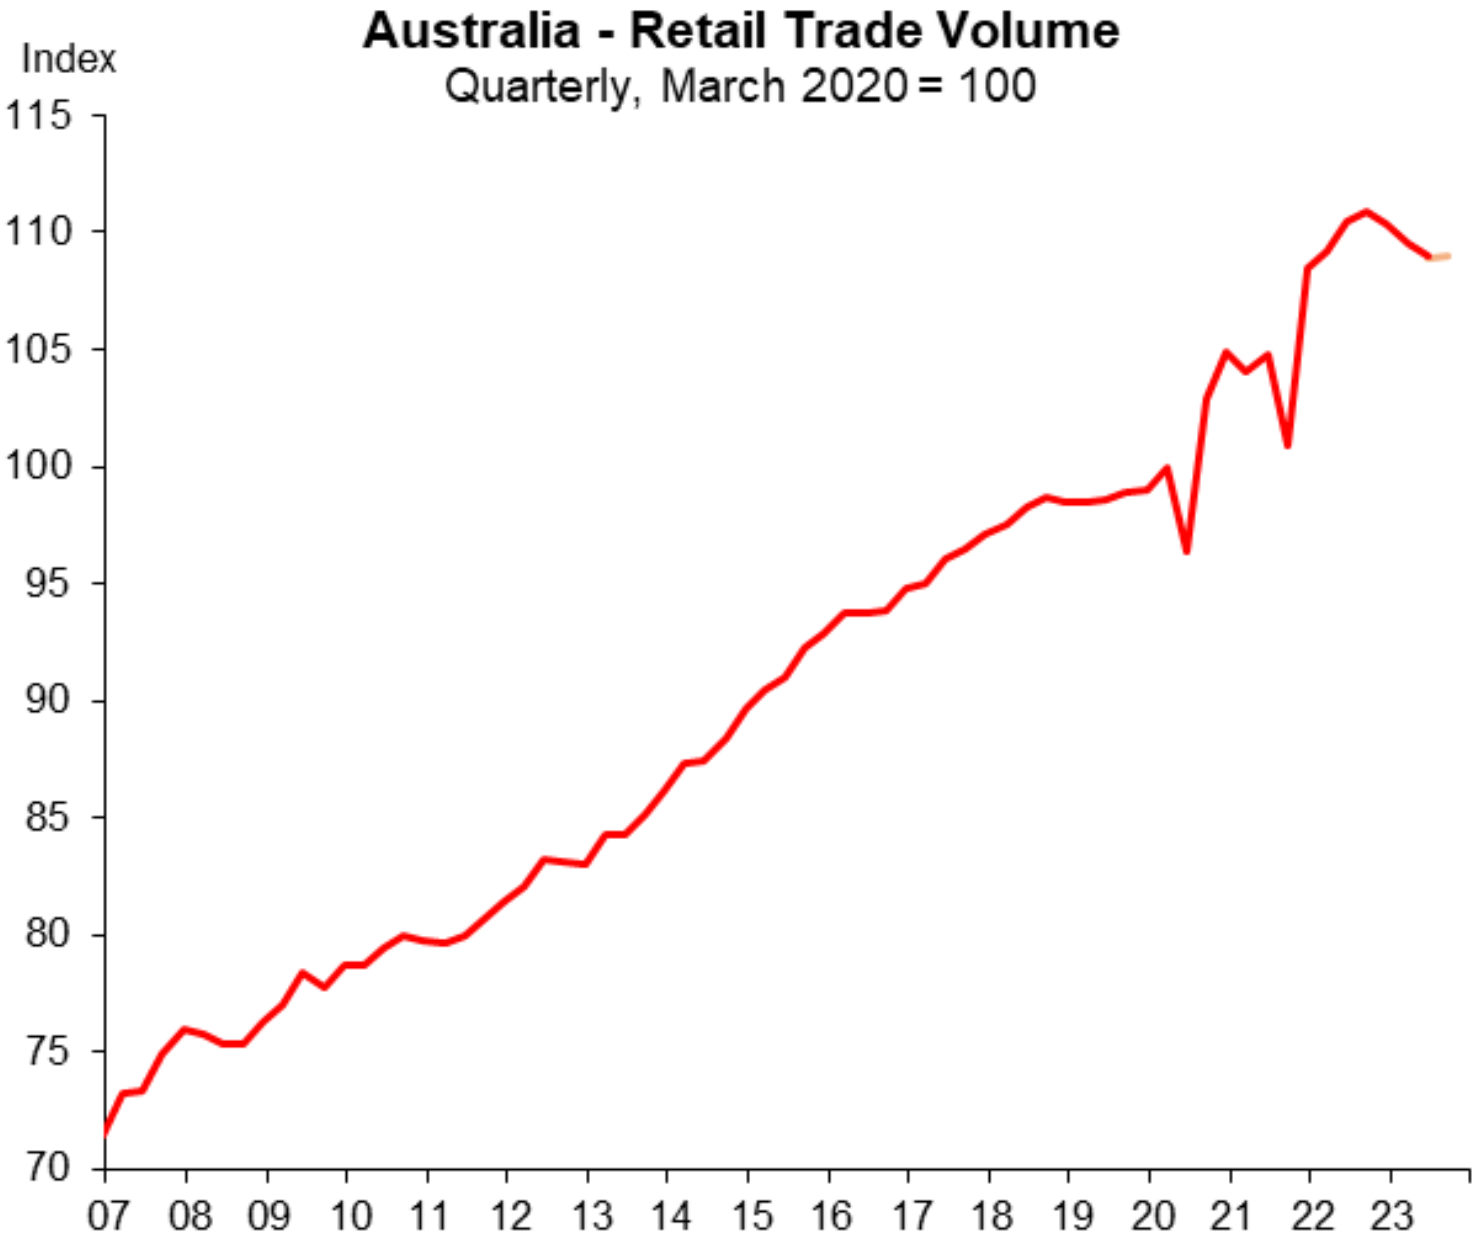 Retail sales volumes